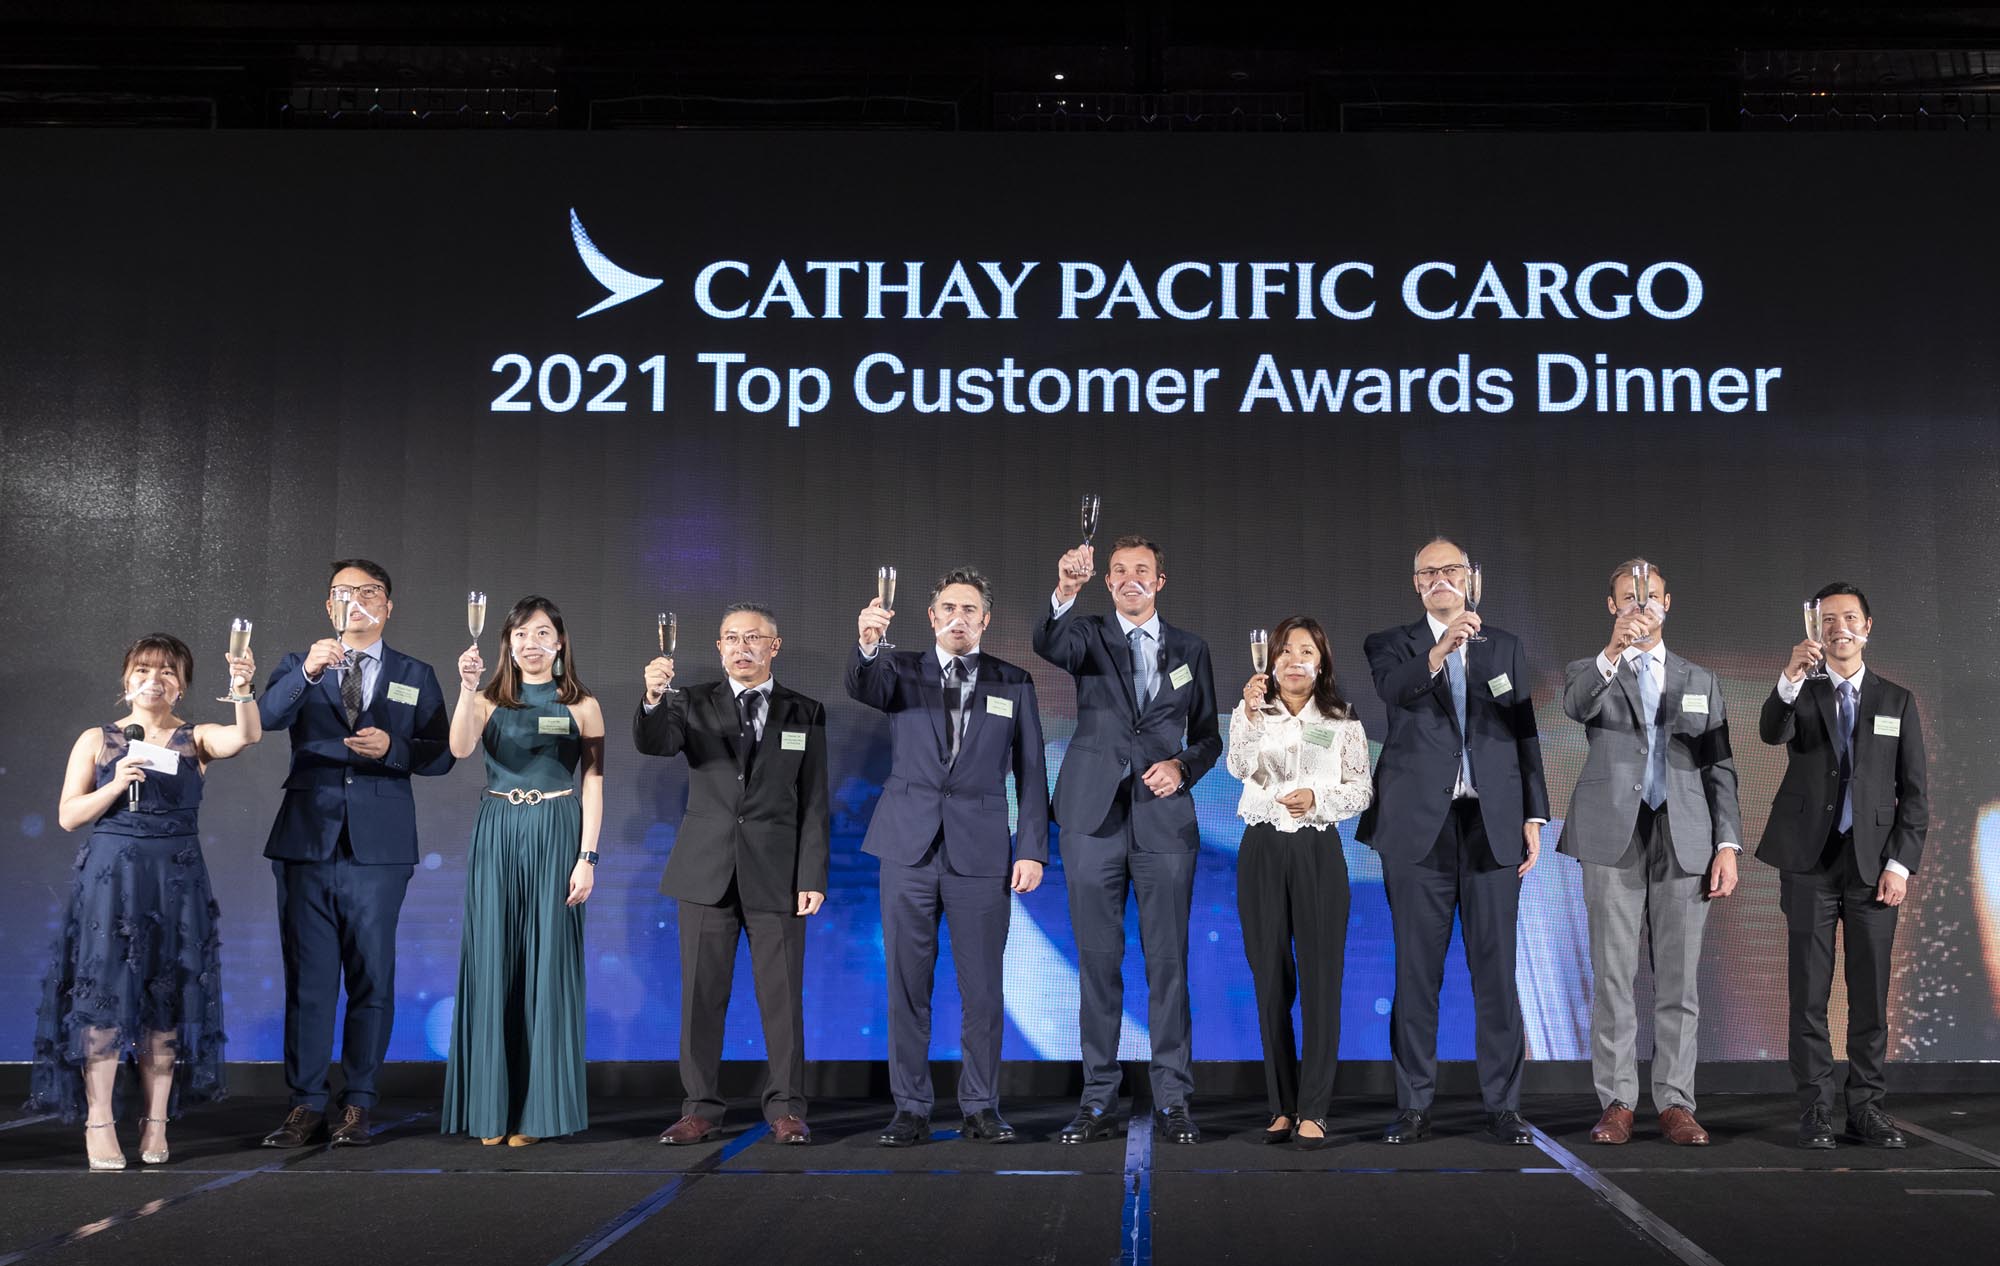 Cathay Pacific Cargo senior leadership at the 2021 Top Customer Awards Dinner